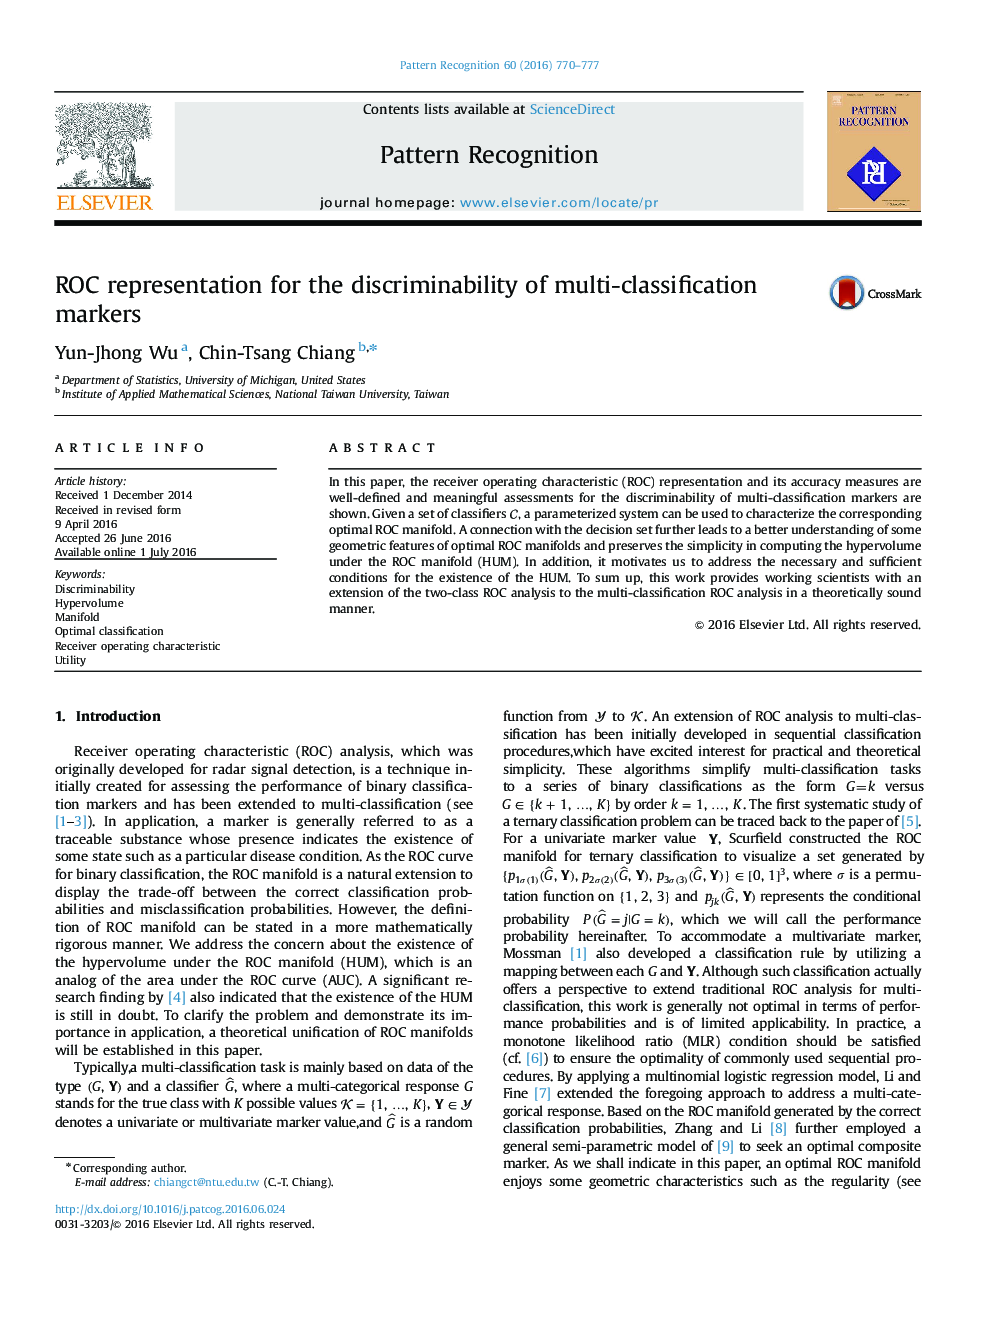 ROC representation for the discriminability of multi-classification markers